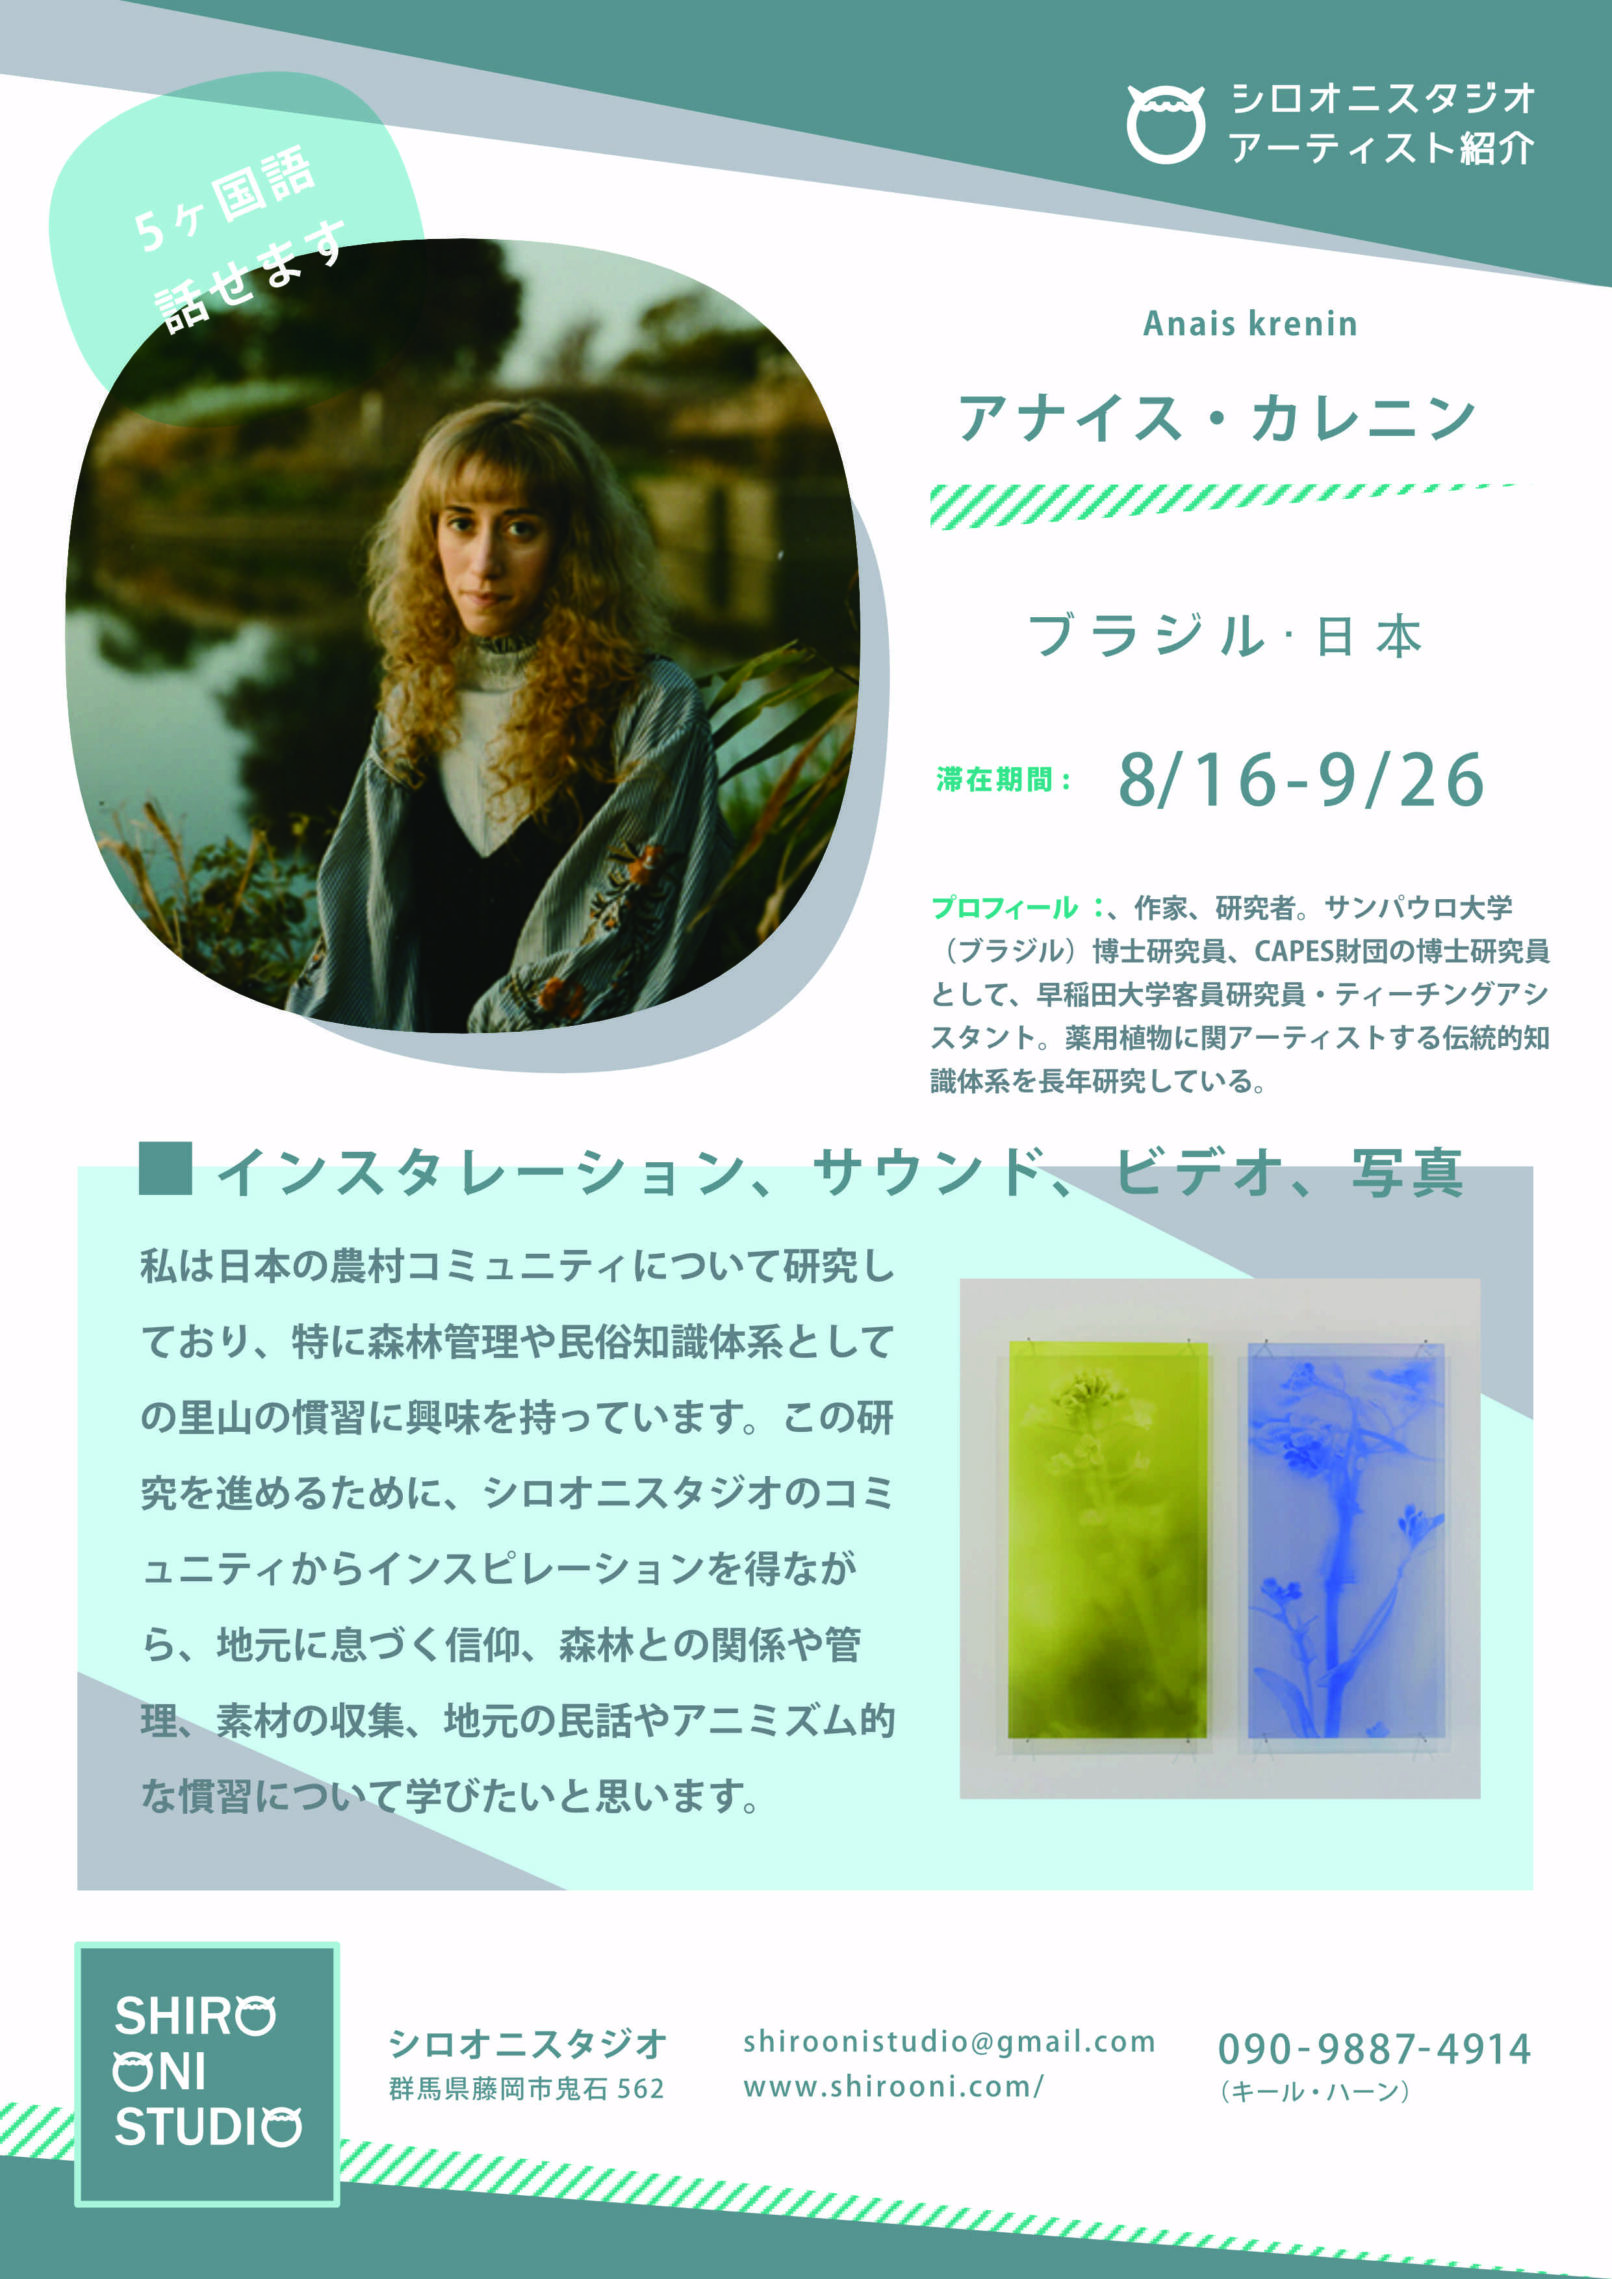 Anais Karenin participated in the Shiro Oni Studio art residency program in Onishi Japan.